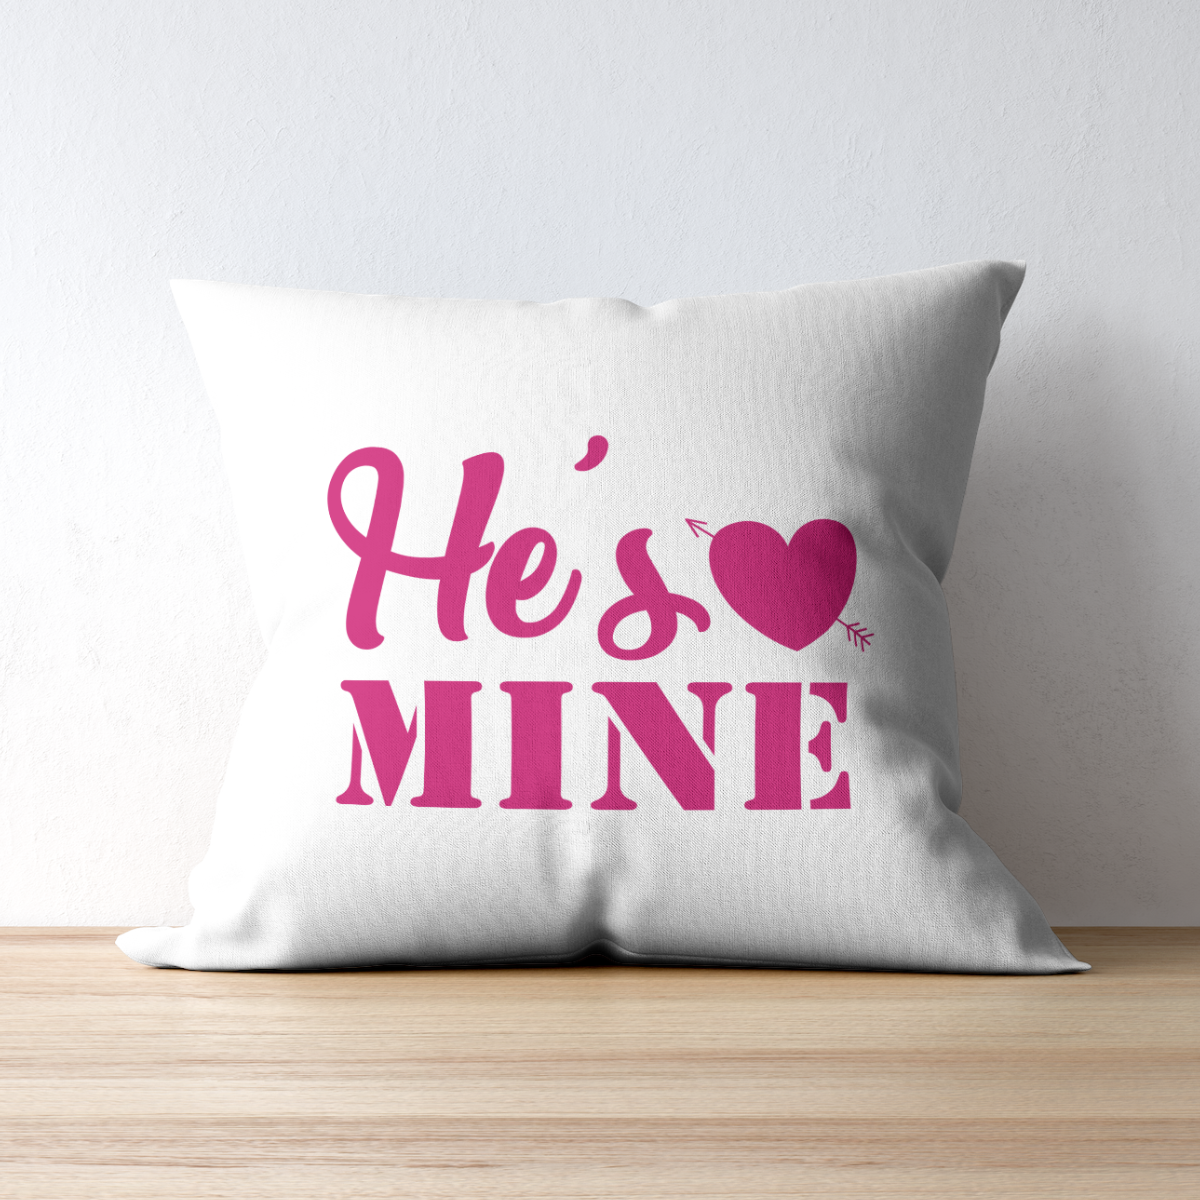 He's Mine SVG | Digital Download | Cut File | SVG Only The Sweet Stuff